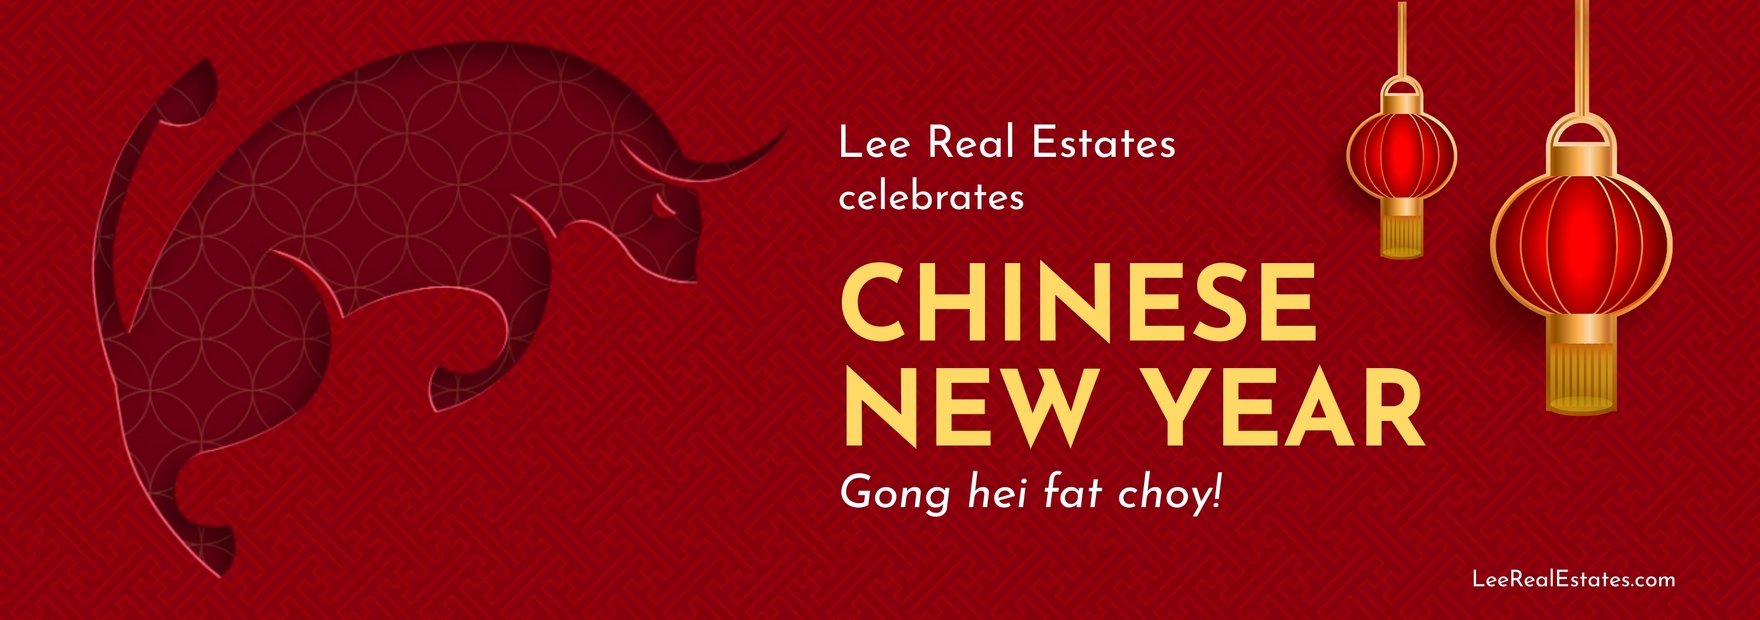 Chinese New Year Tumblr Banner